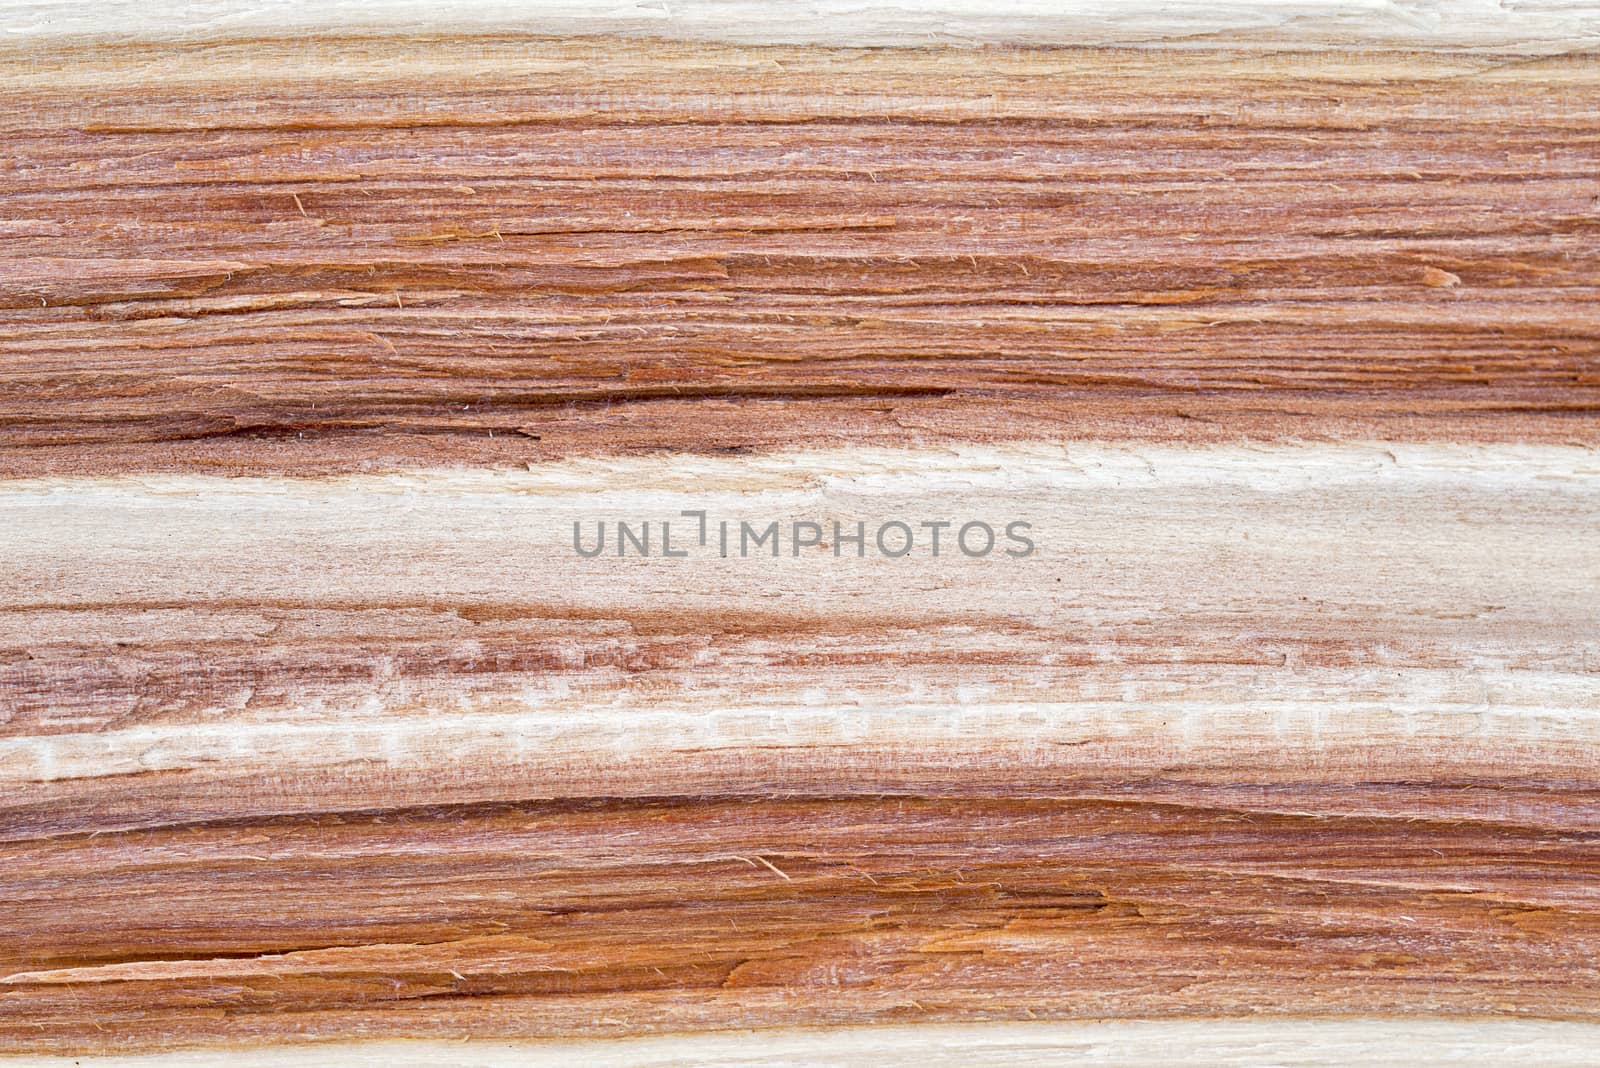  chopped wooden deck by nejuras